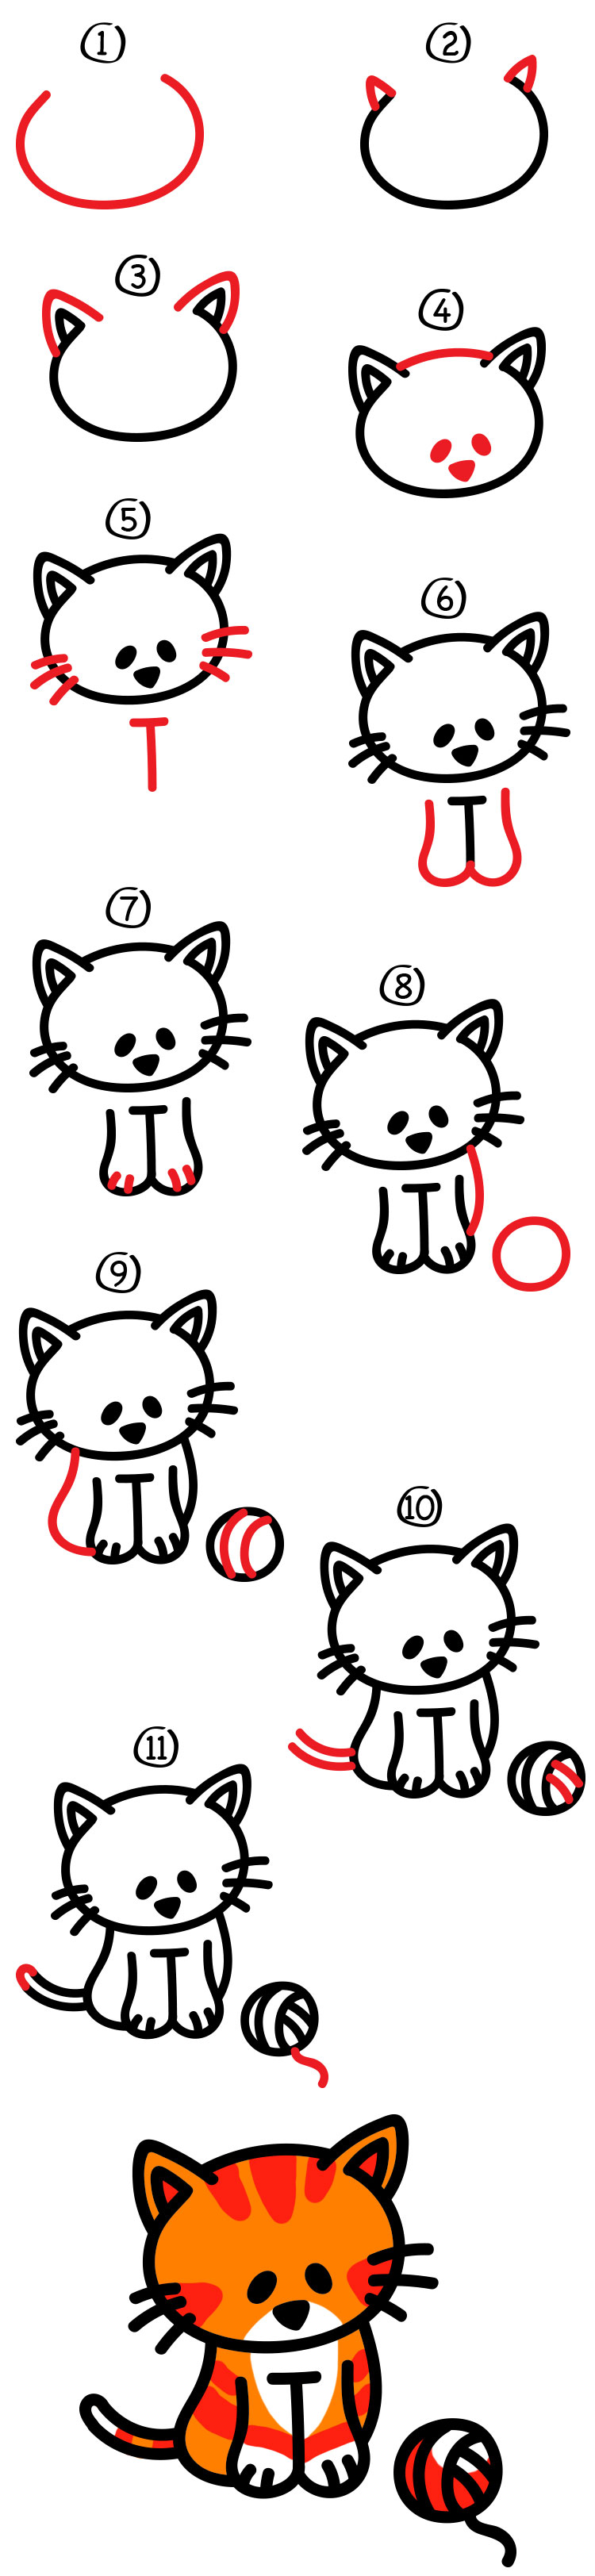 How To Draw A Cartoon Cat Art For Kids Hub